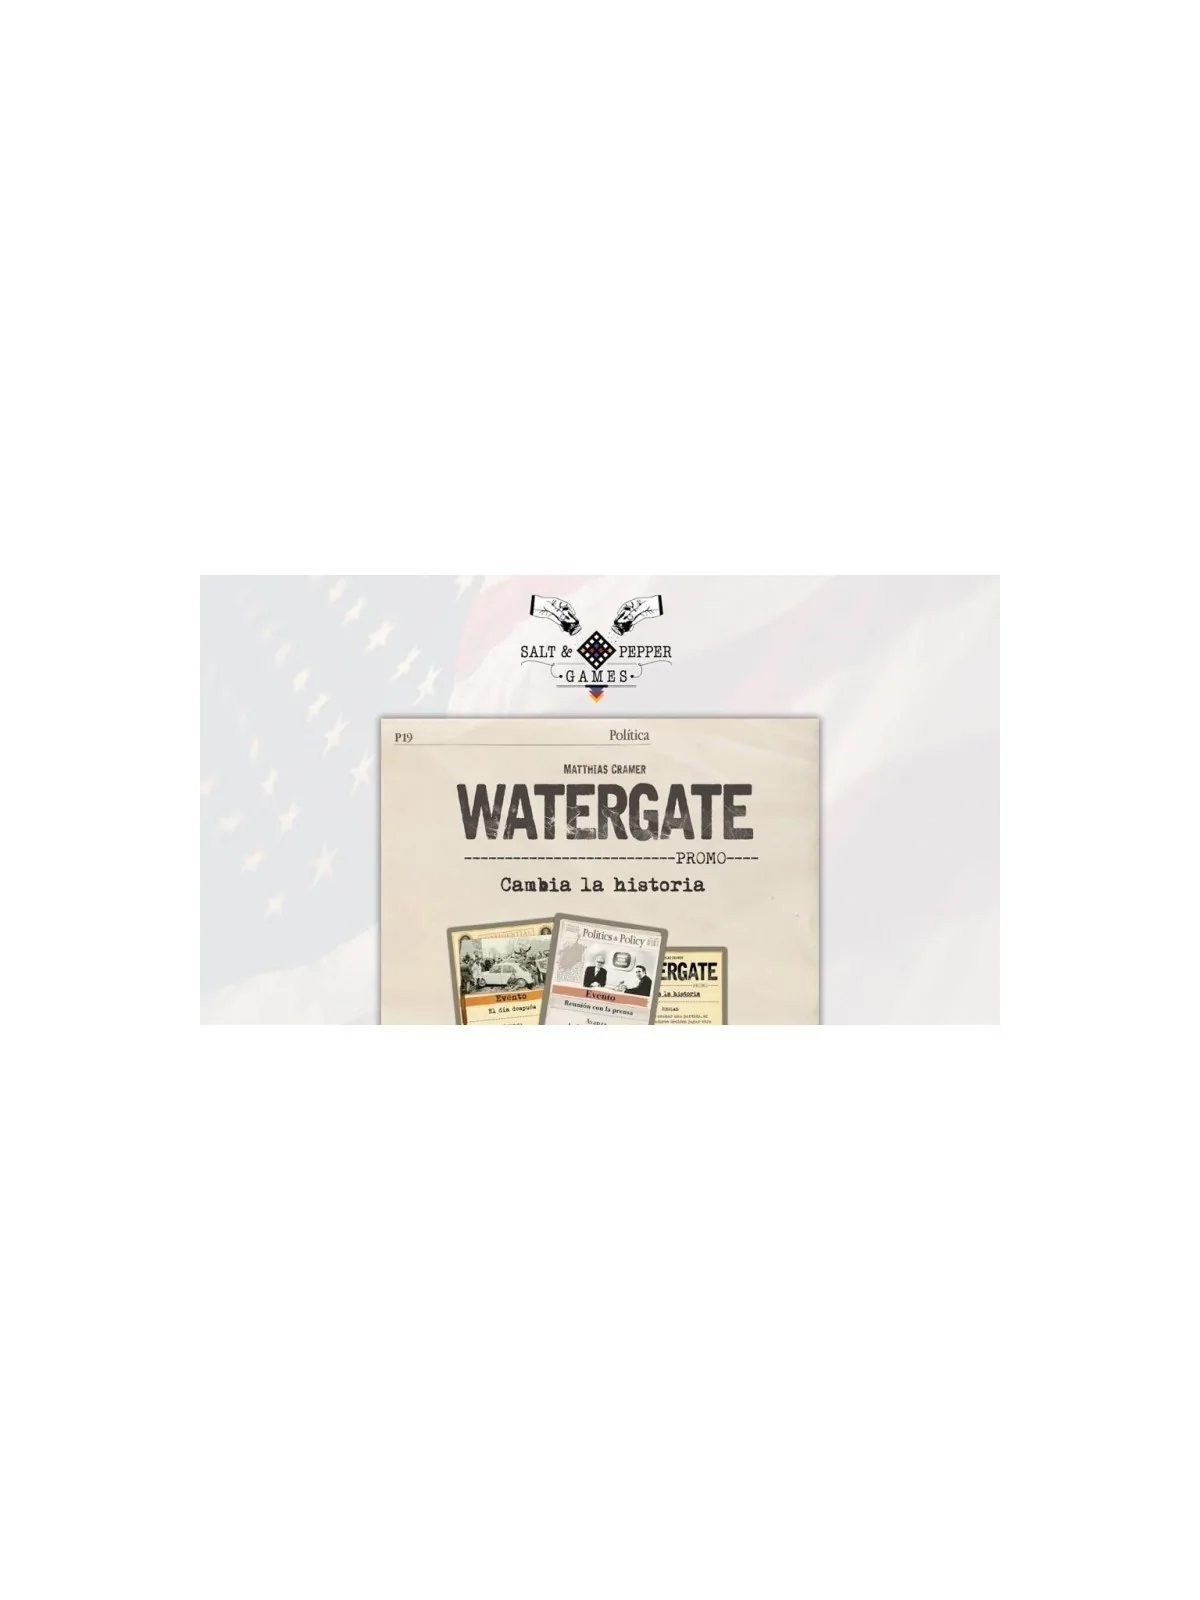 Comprar Cambia la Historia - Pack Cartas Promo Watergate barato al mej